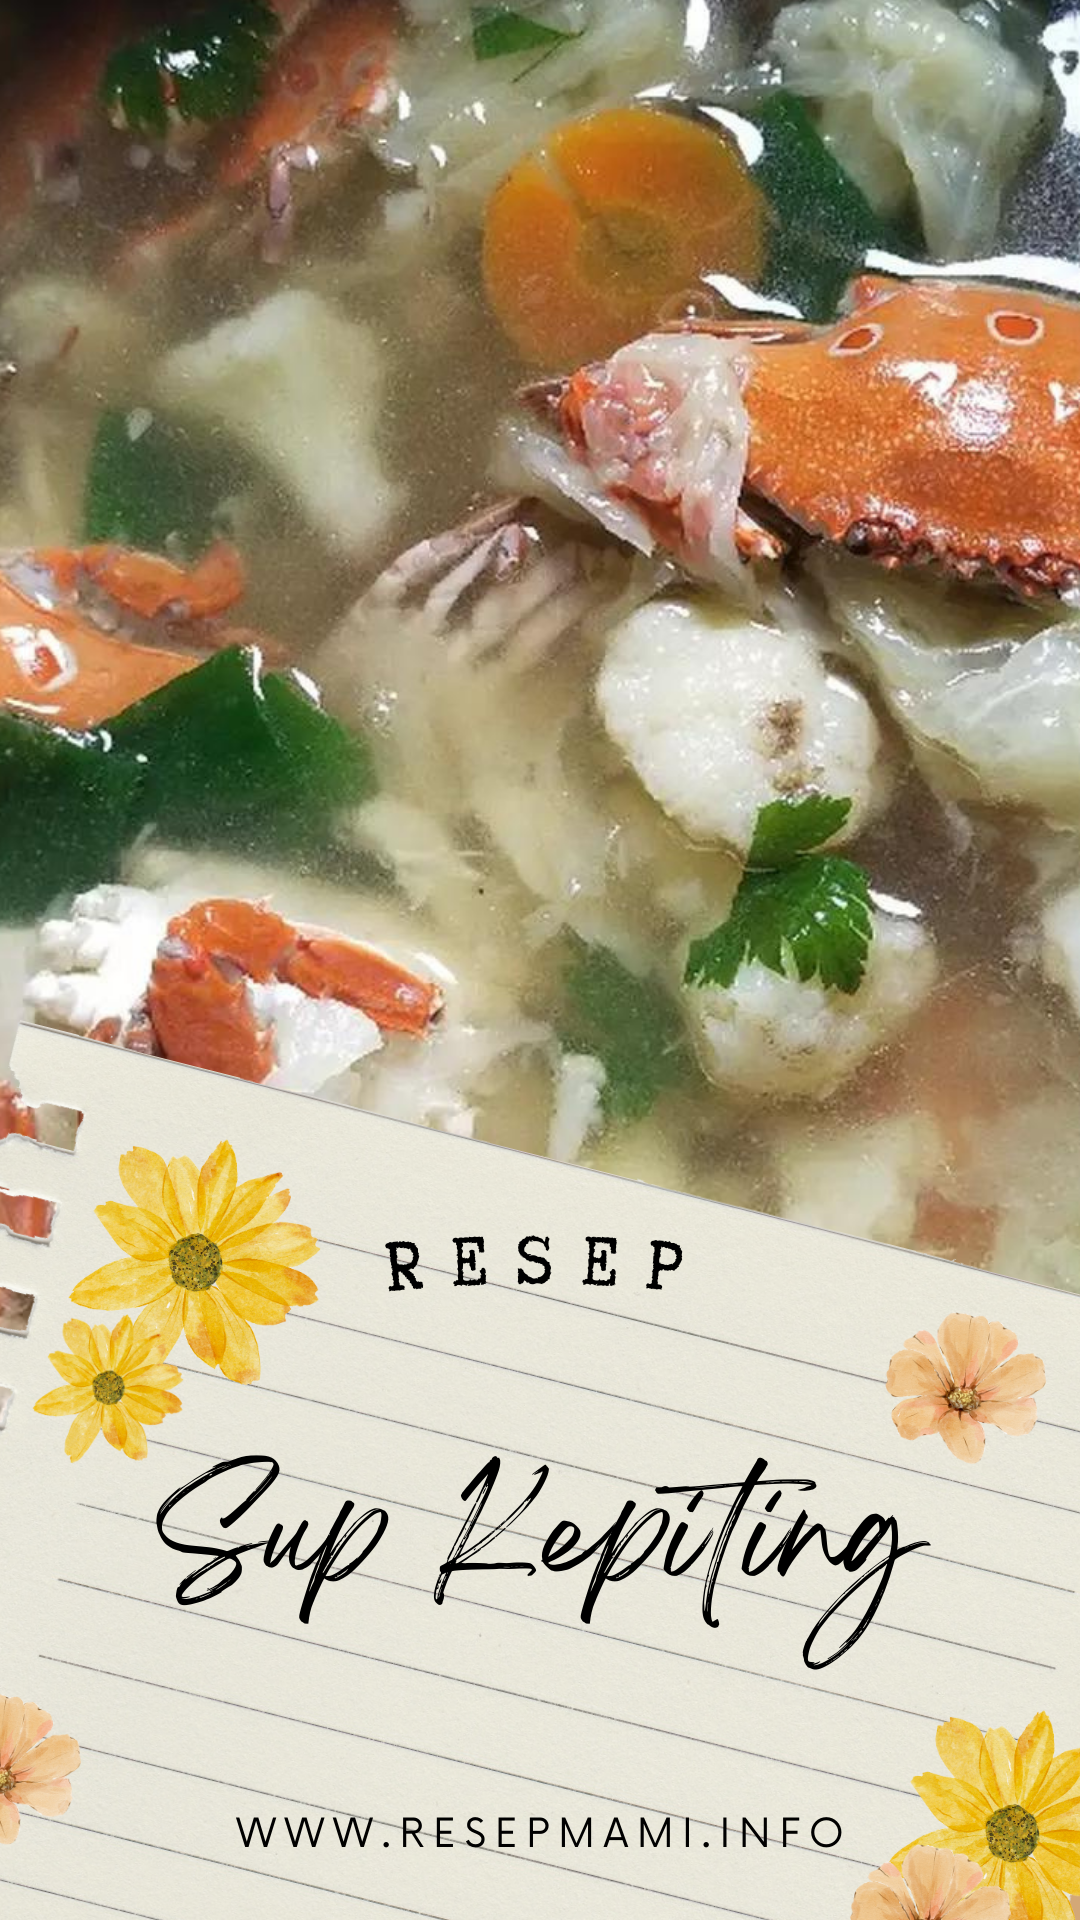 Resep sup kepiting